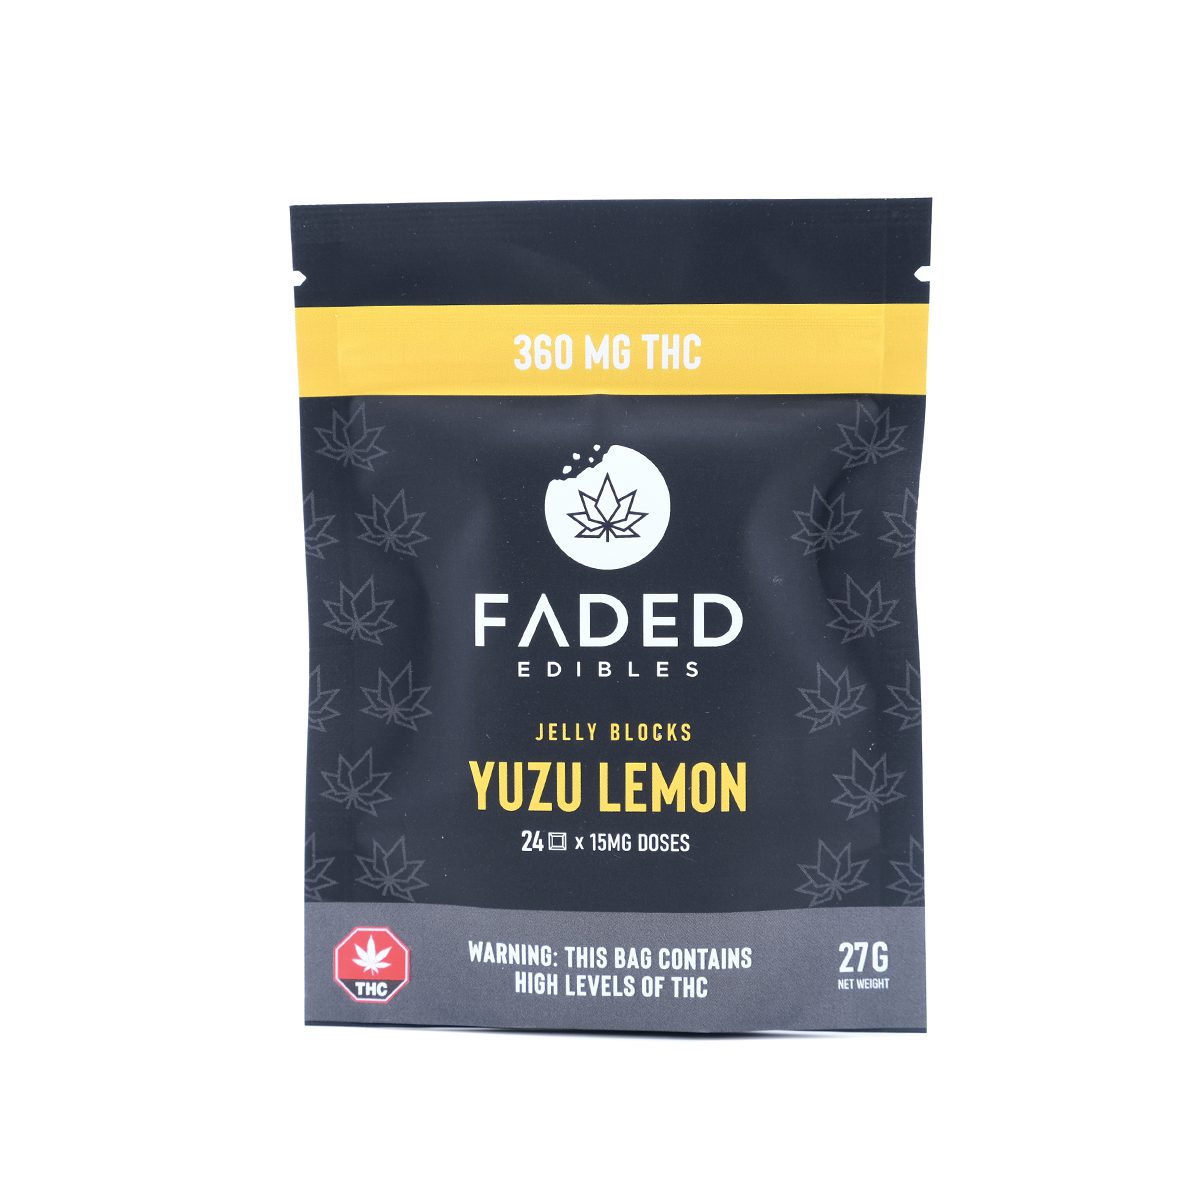 Yuzu Lemon Jelly Blocks 360mg by Faded Edibles